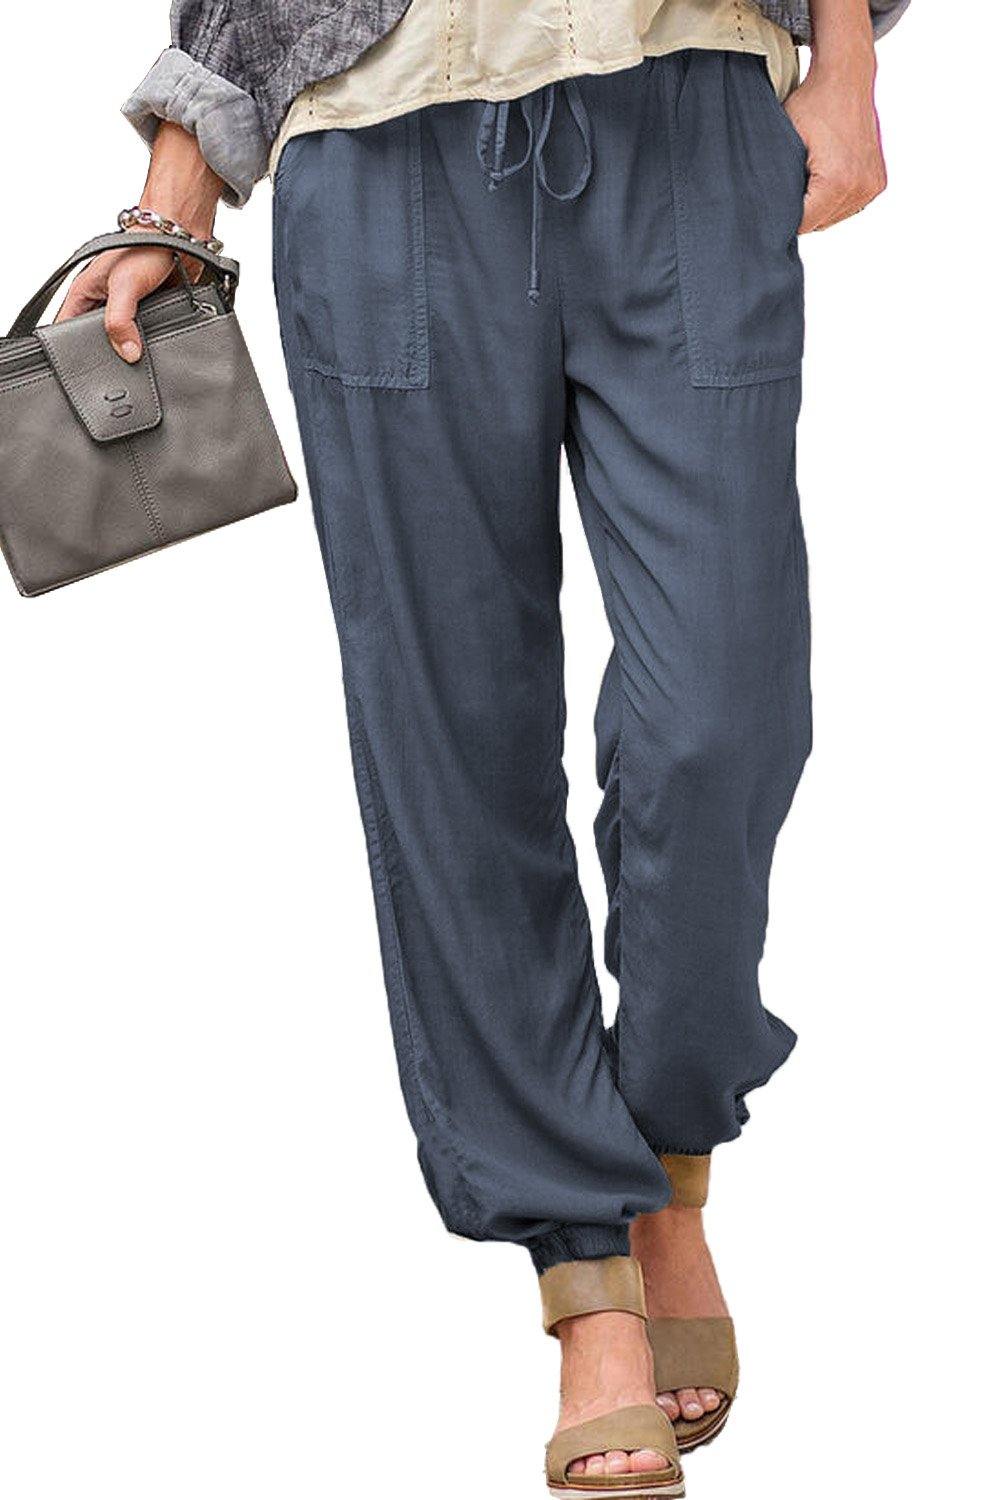 Drawstring Elastic Waist Pull-on Casual Pants with Pockets - L & M Kee, LLC